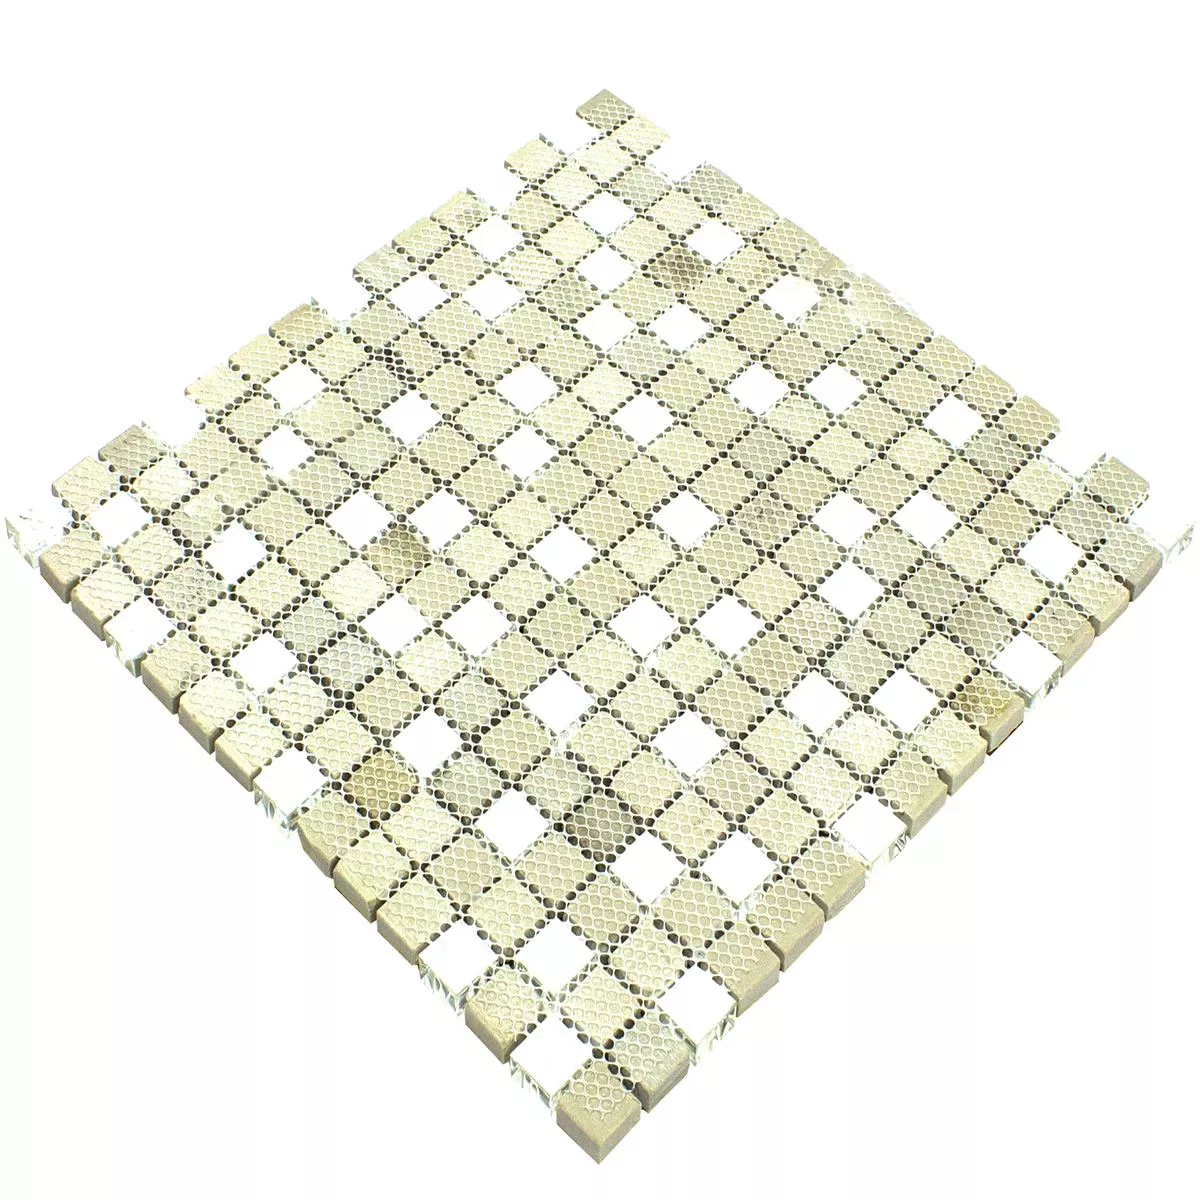 Sample Glass Metal Stainless Steel Mosaic Tiles Stella Blanc Silver